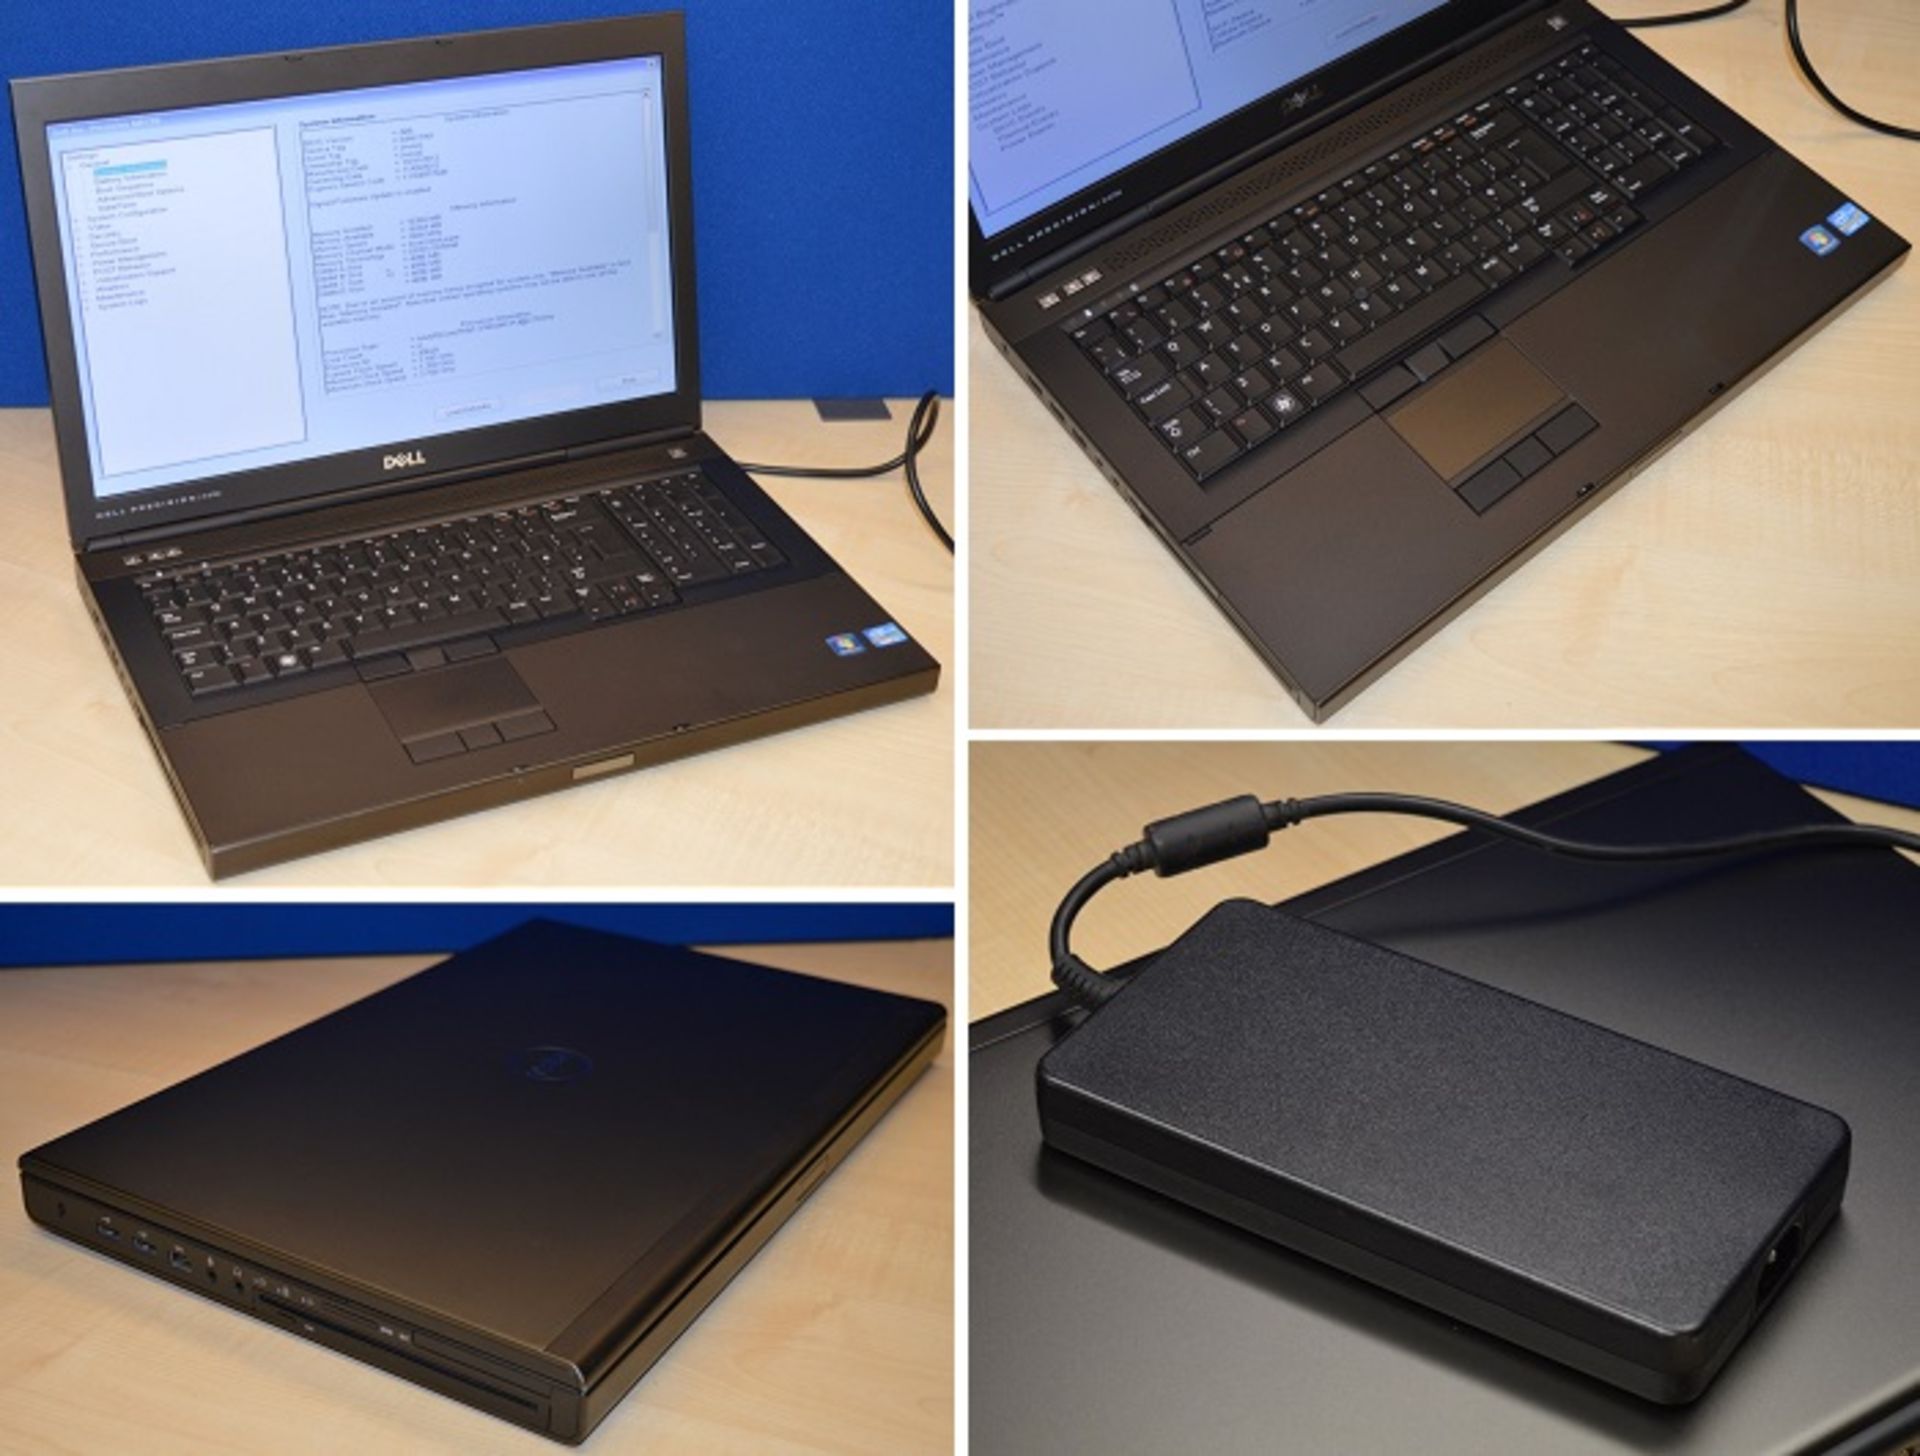 1 x Dell Precision M6700 Business Workstation 17 Inch Laptop - Intel Core i7 2.7ghz Quad Core